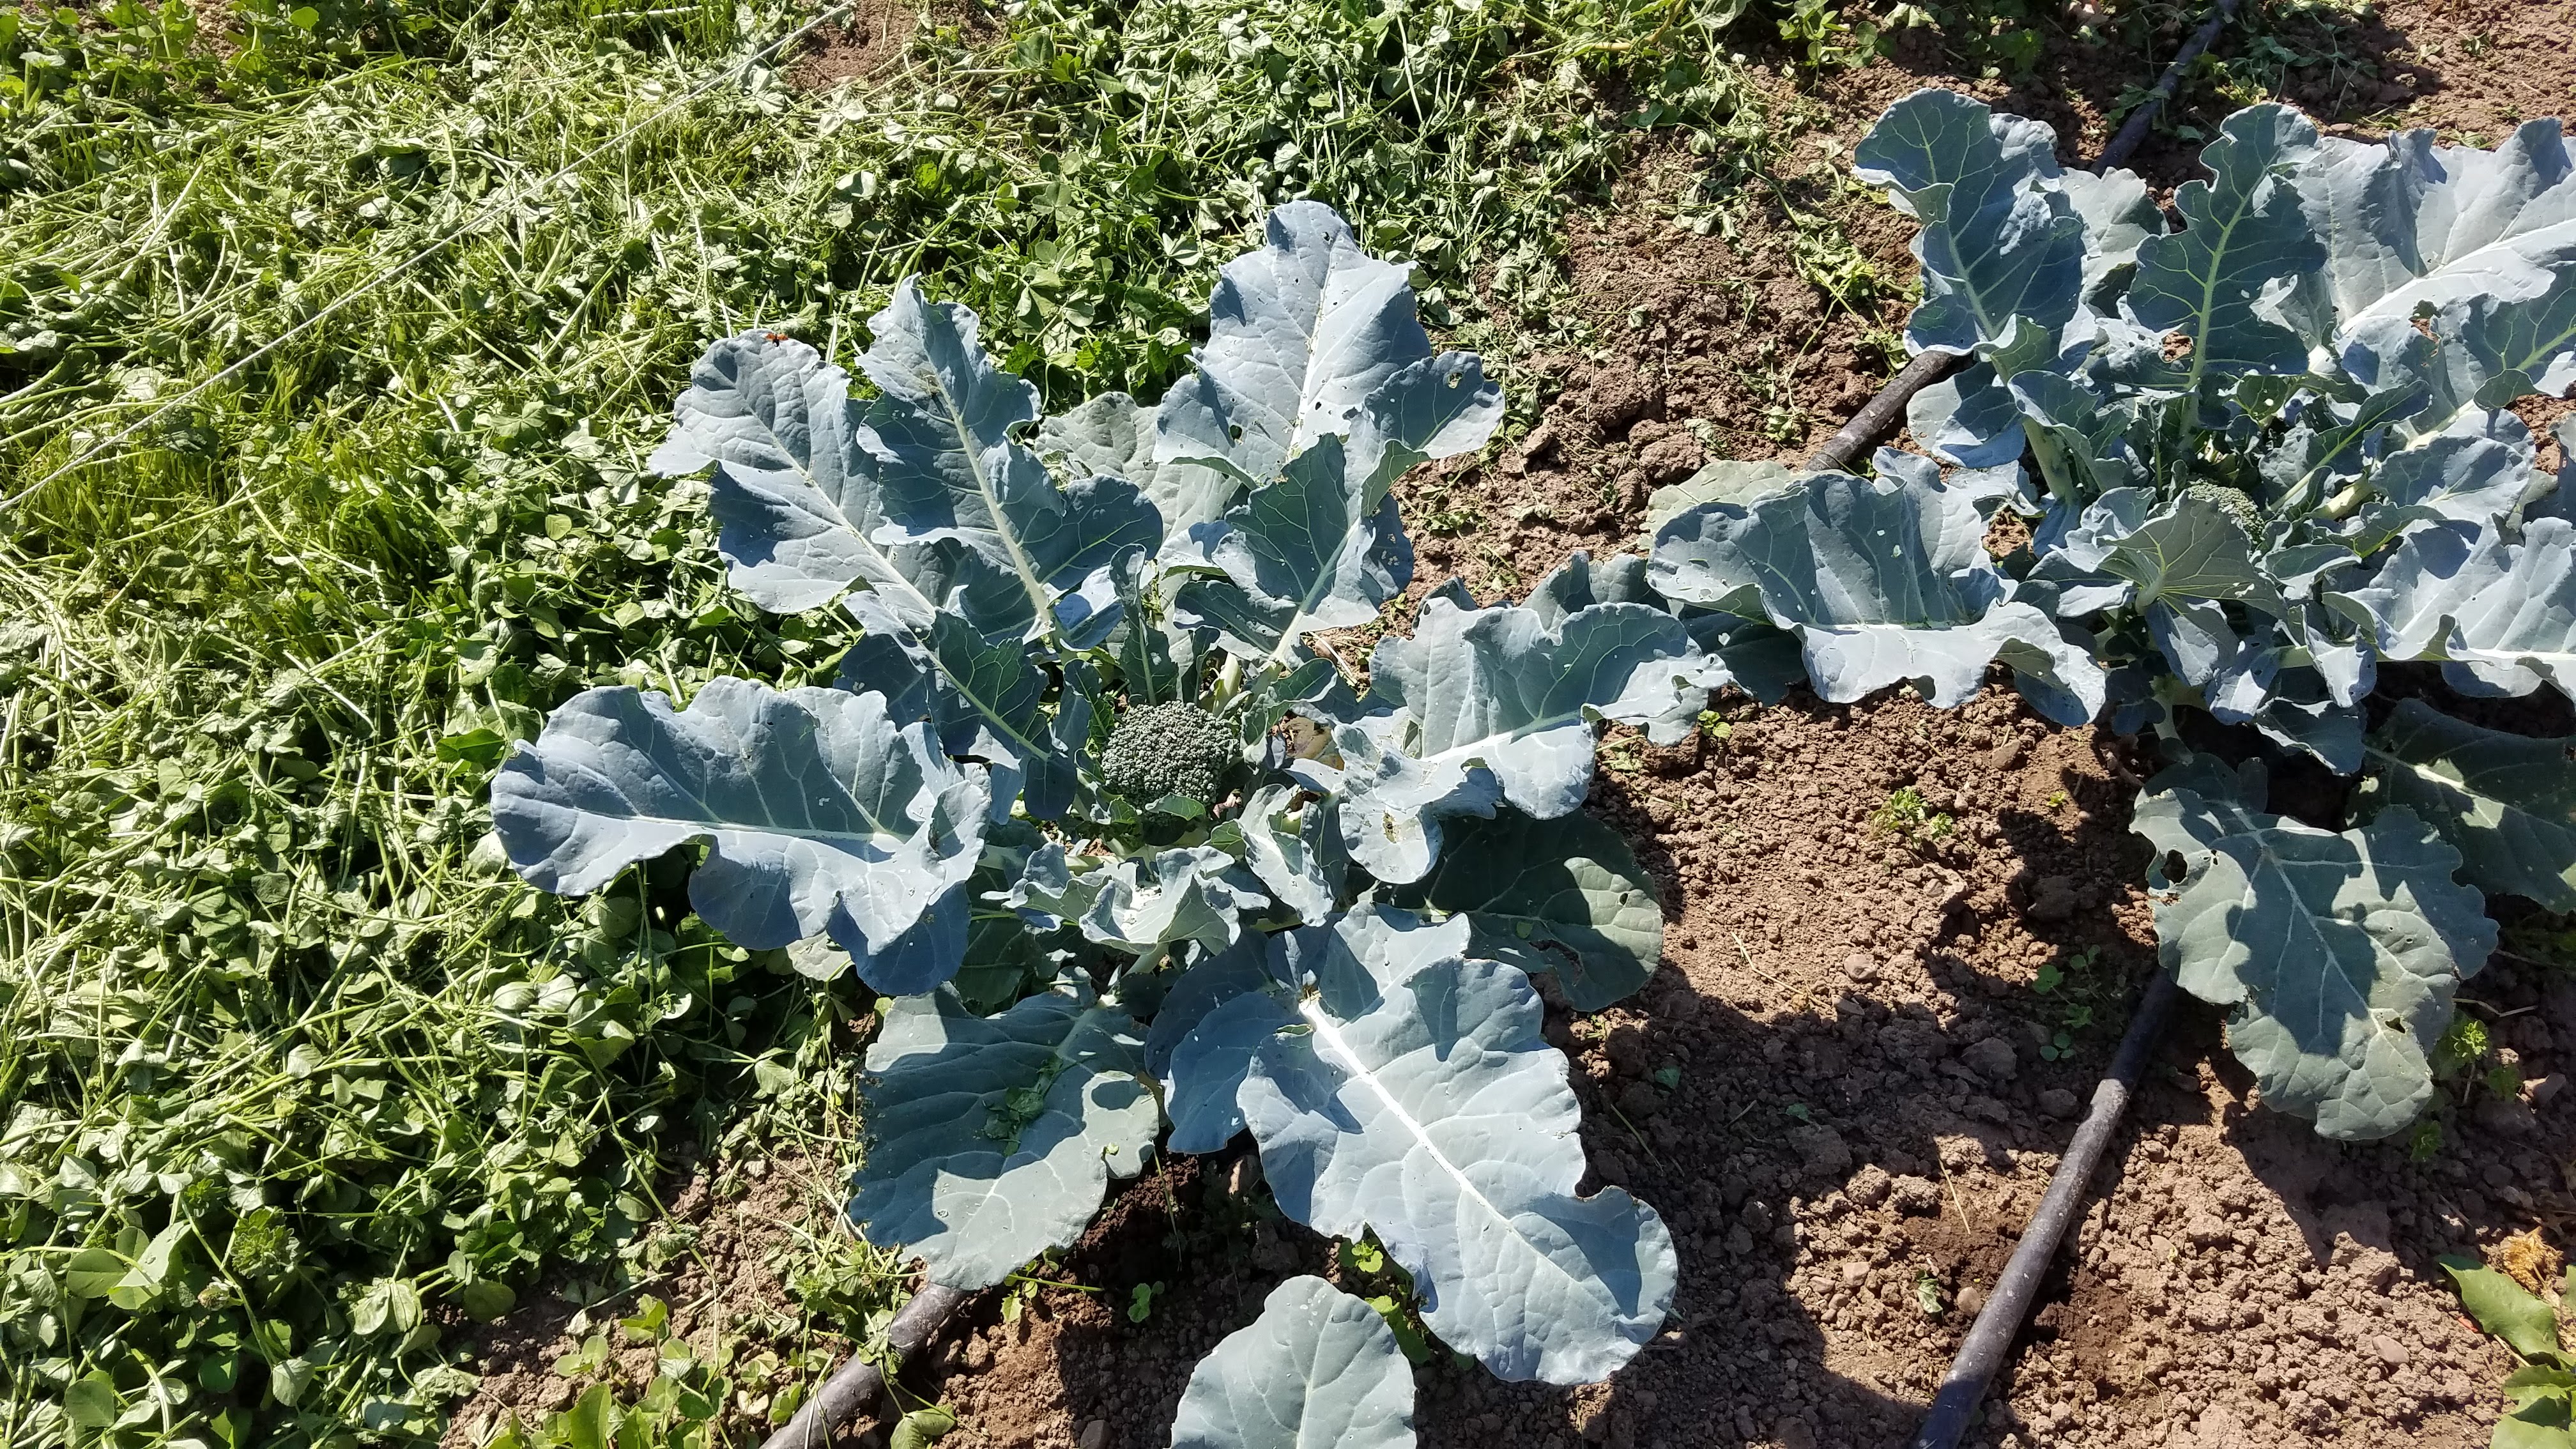 broccoli plants